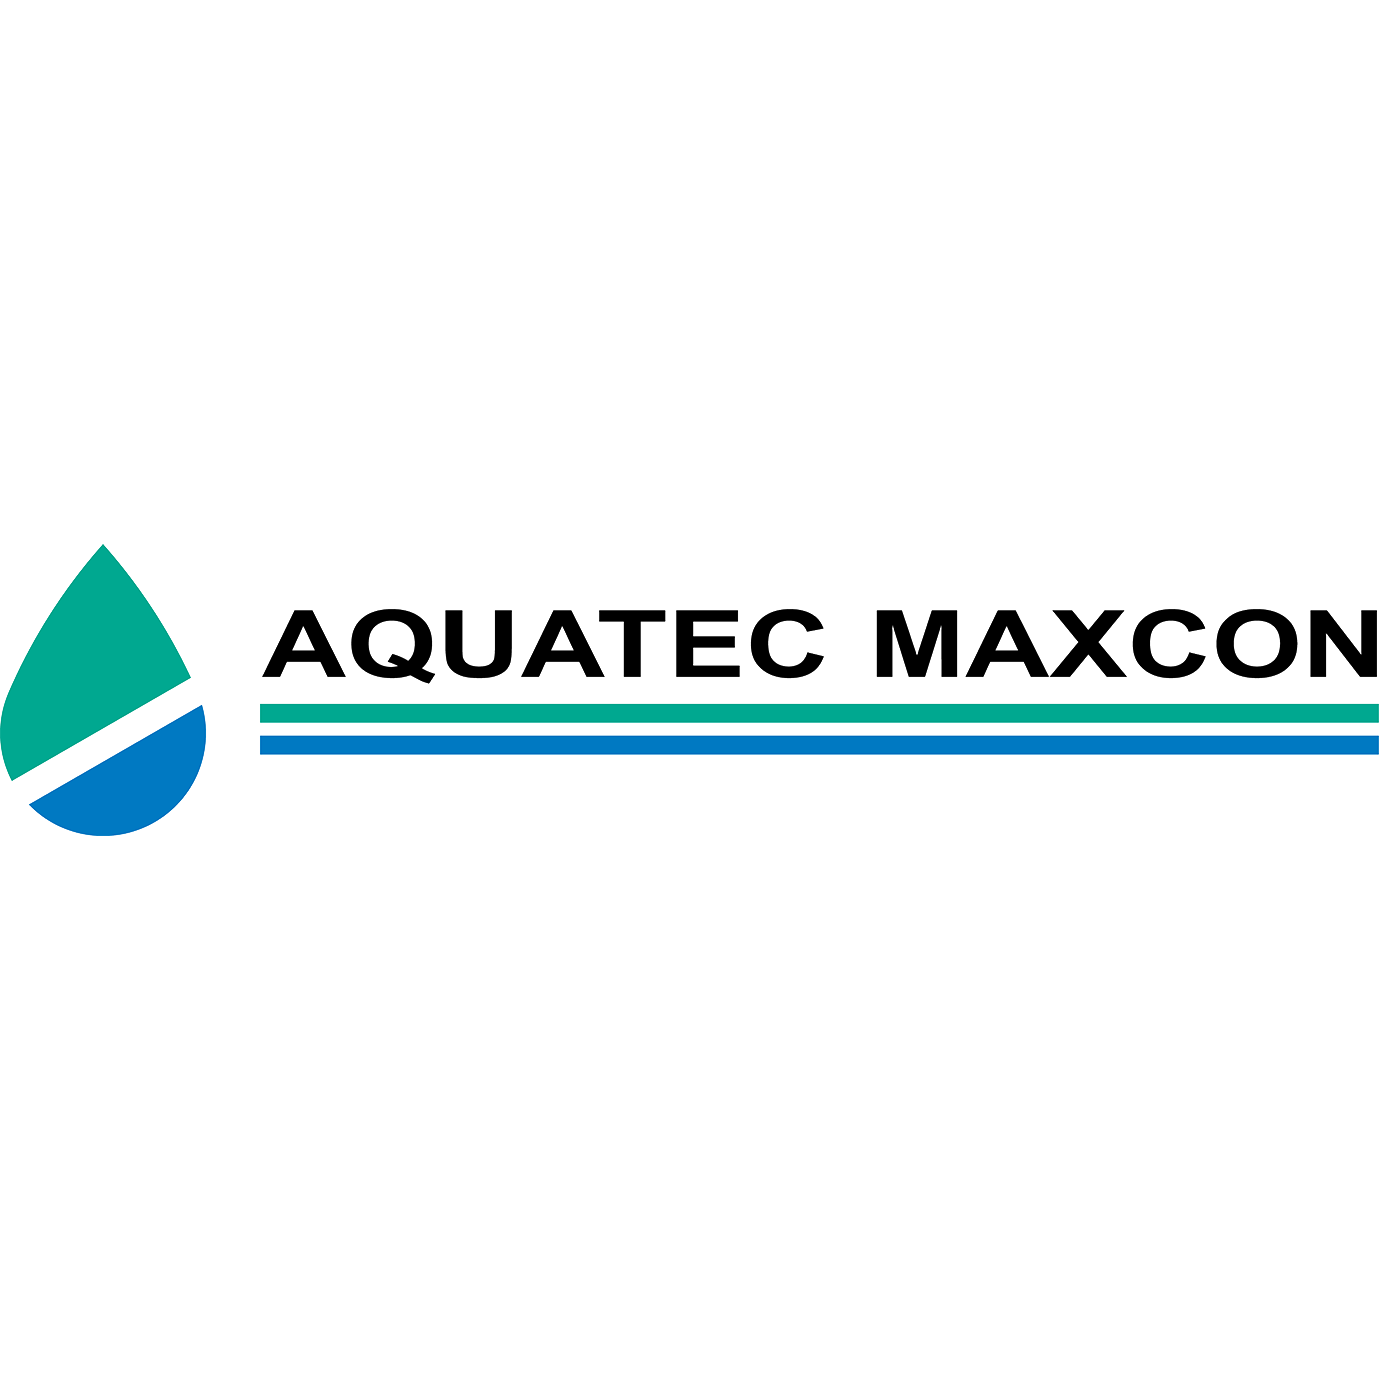 Aquatec Maxcon Pty Ltd - Saint Marys, NSW 2760 - (02) 8603 5200 | ShowMeLocal.com